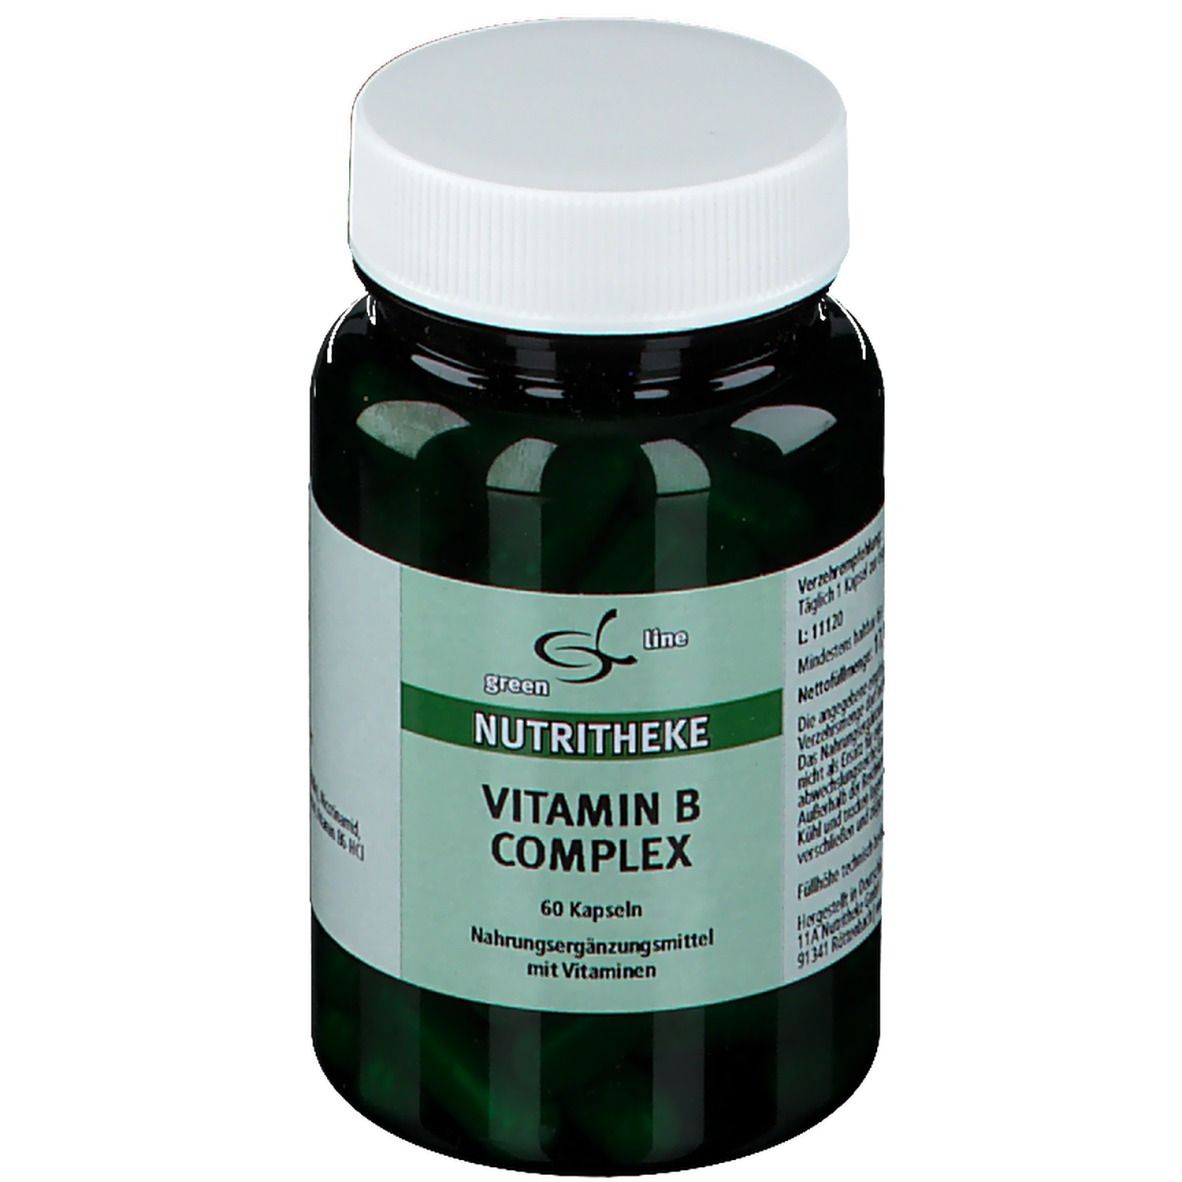 Nutritheke Vitamin B Complex